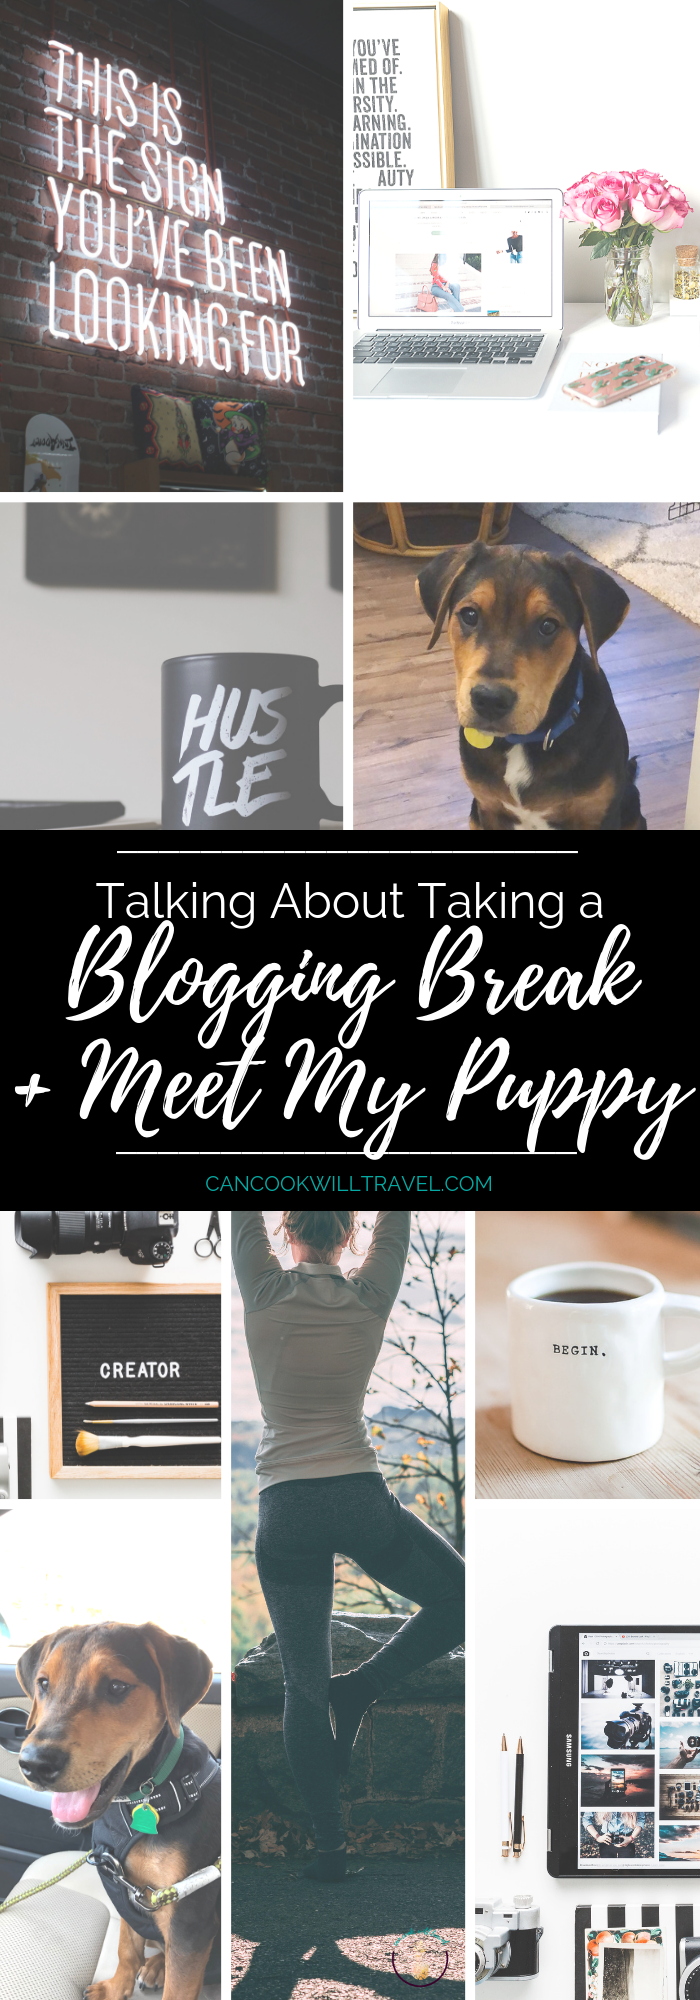 Blogging Break_Tall